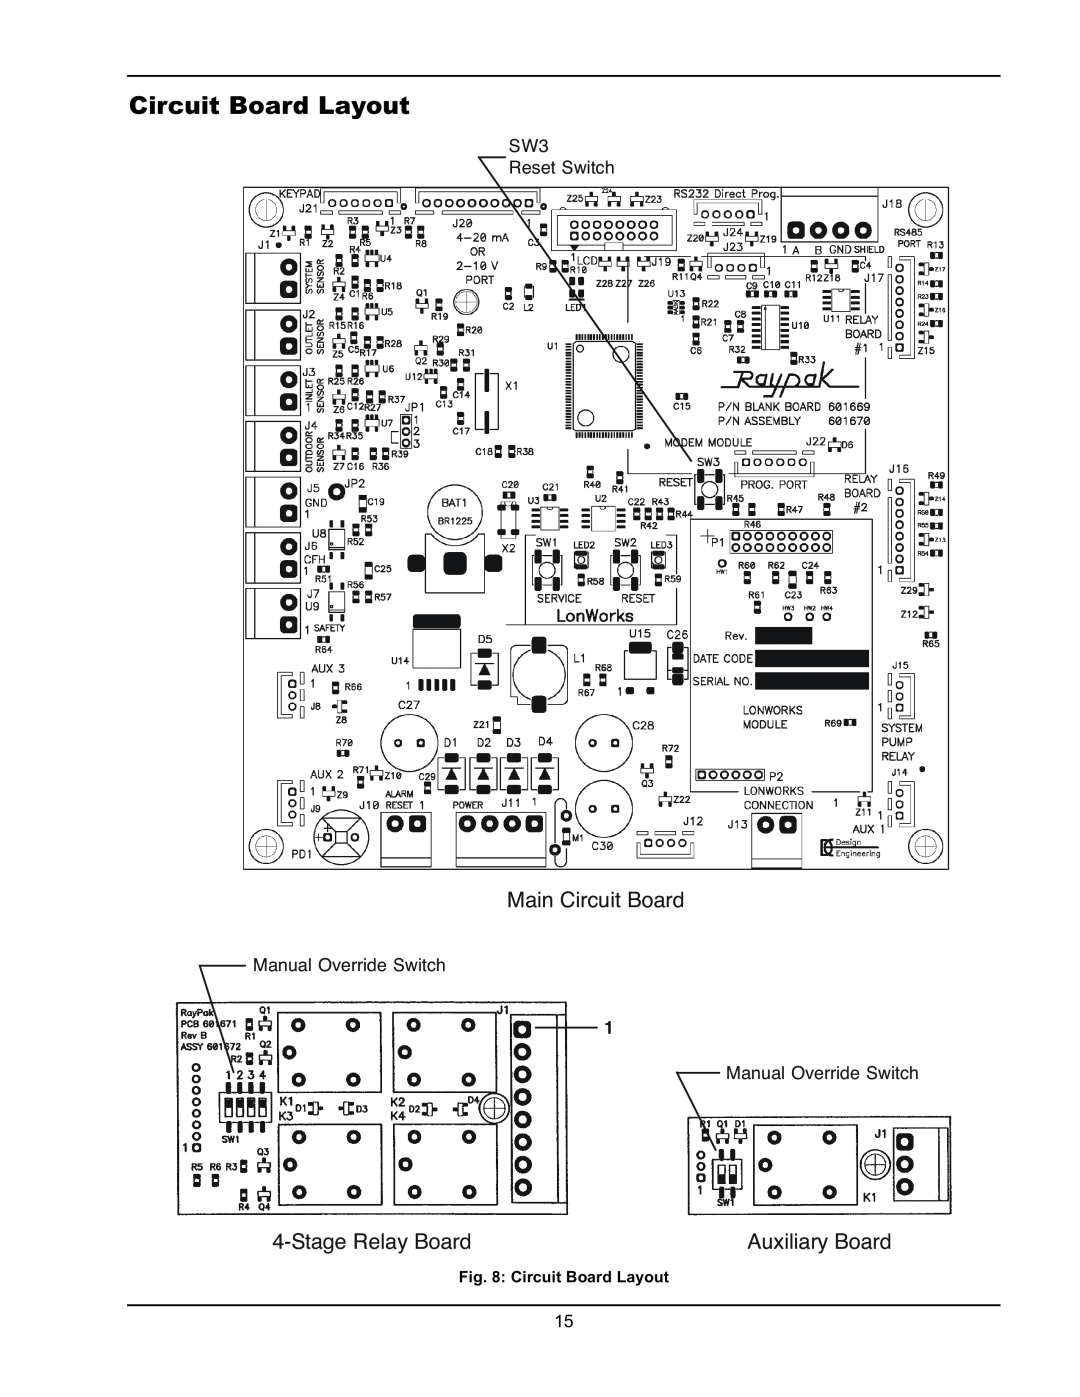 Raypak Y-200 manual Circuit Board Layout, Main Circuit Board, StageRelay Board, Auxiliary Board 